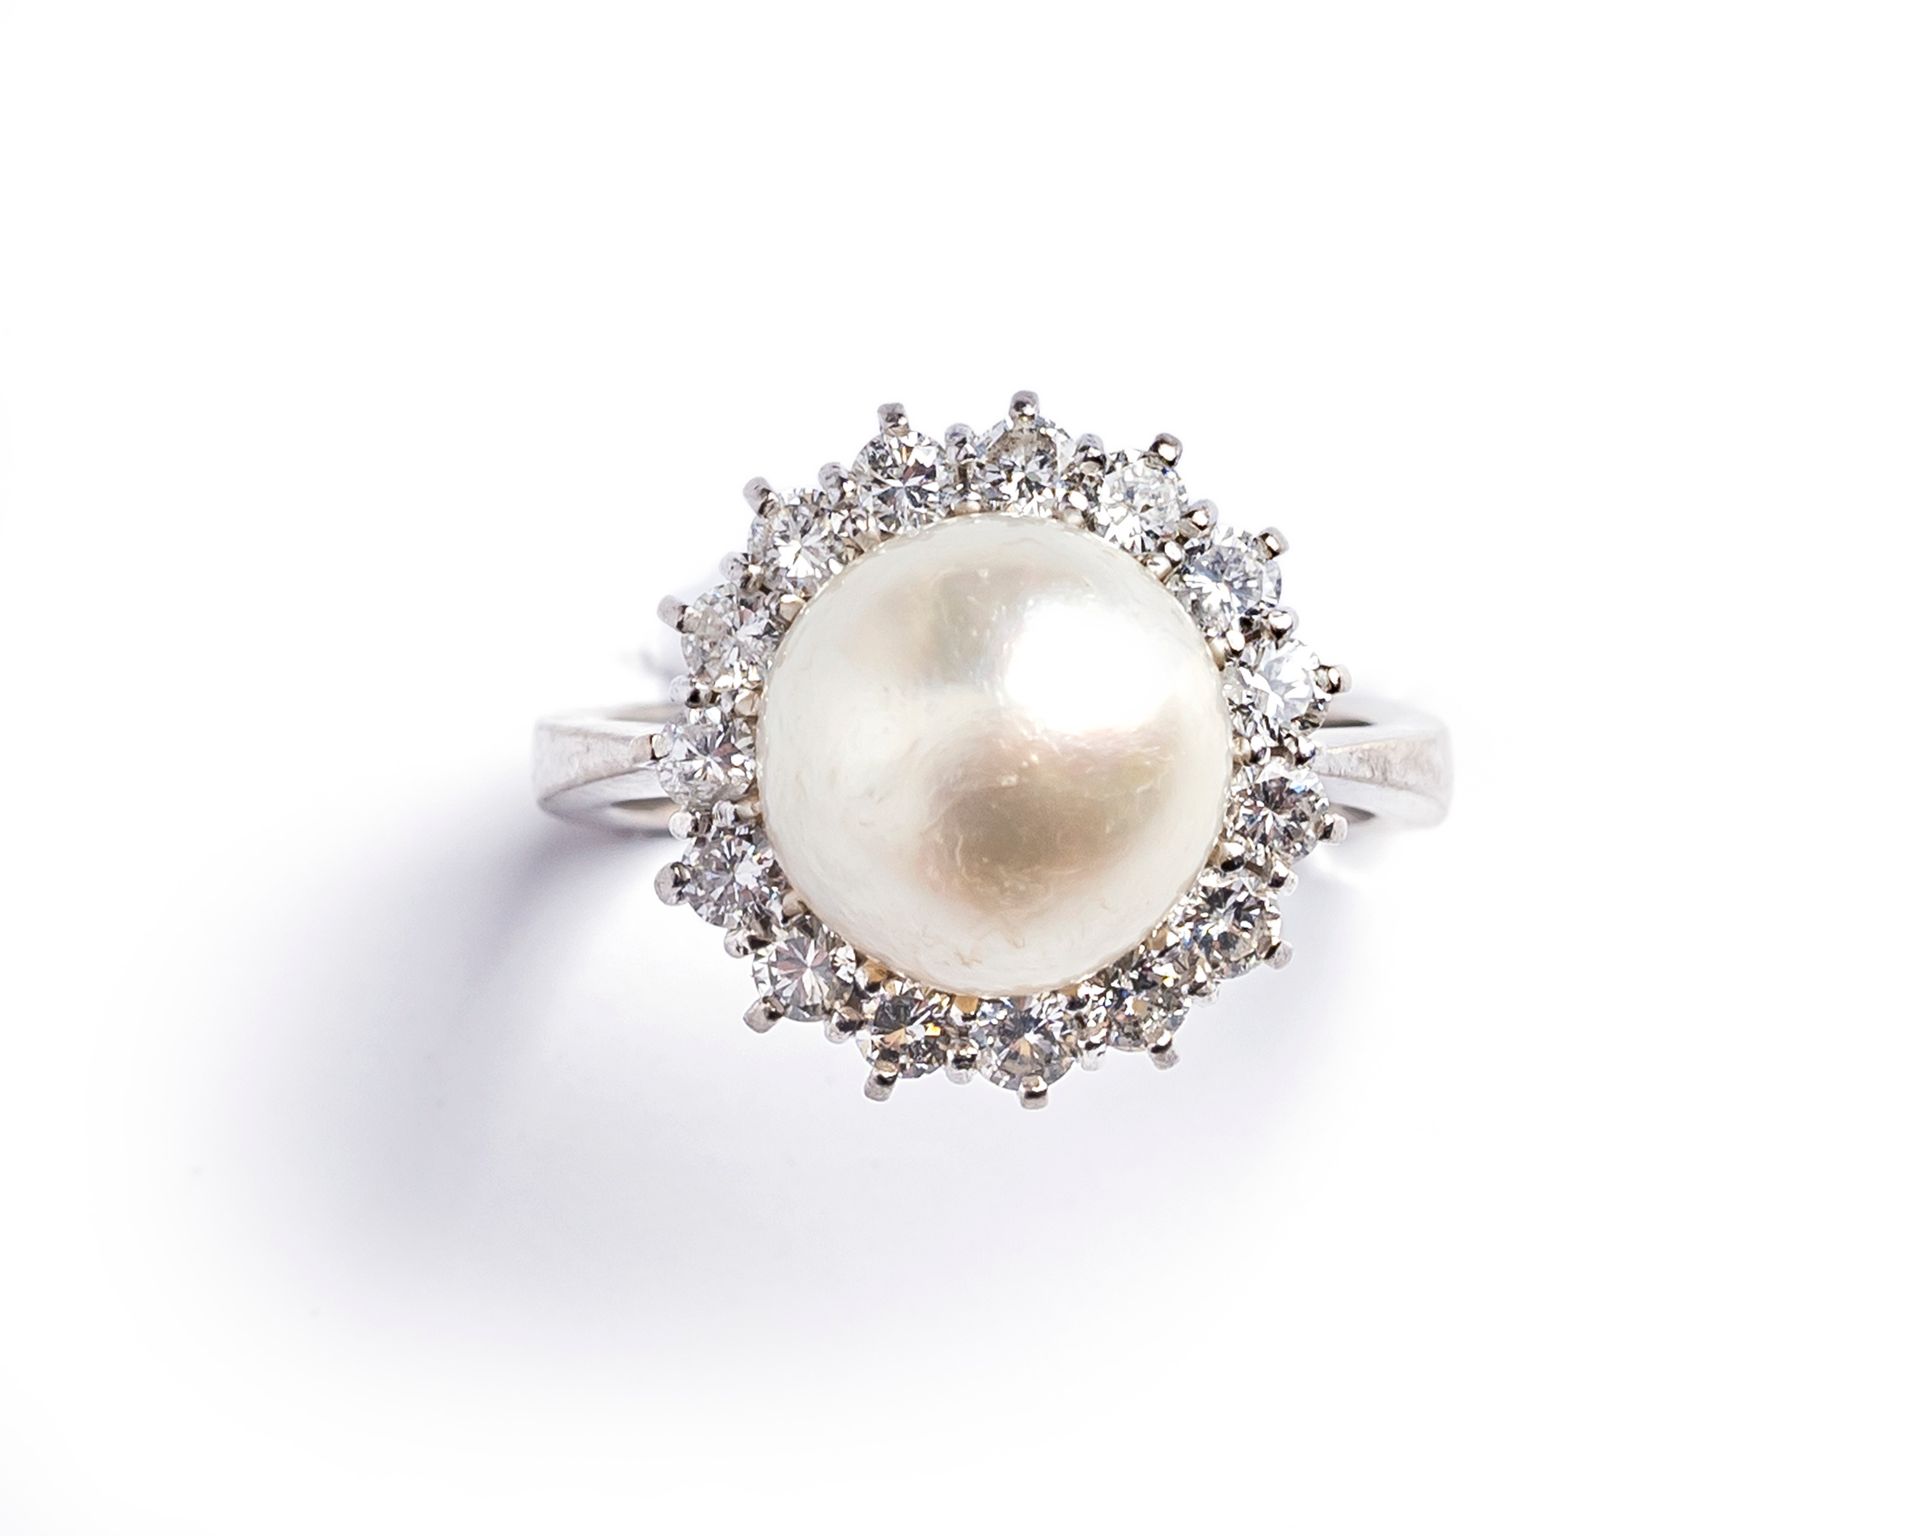 Null 18K（750千分之一）白金戒指，镶嵌15颗圆形明亮式切割钻石的10毫米白色珍珠（未经测试）。
手指尺寸：52
毛重：6.7克